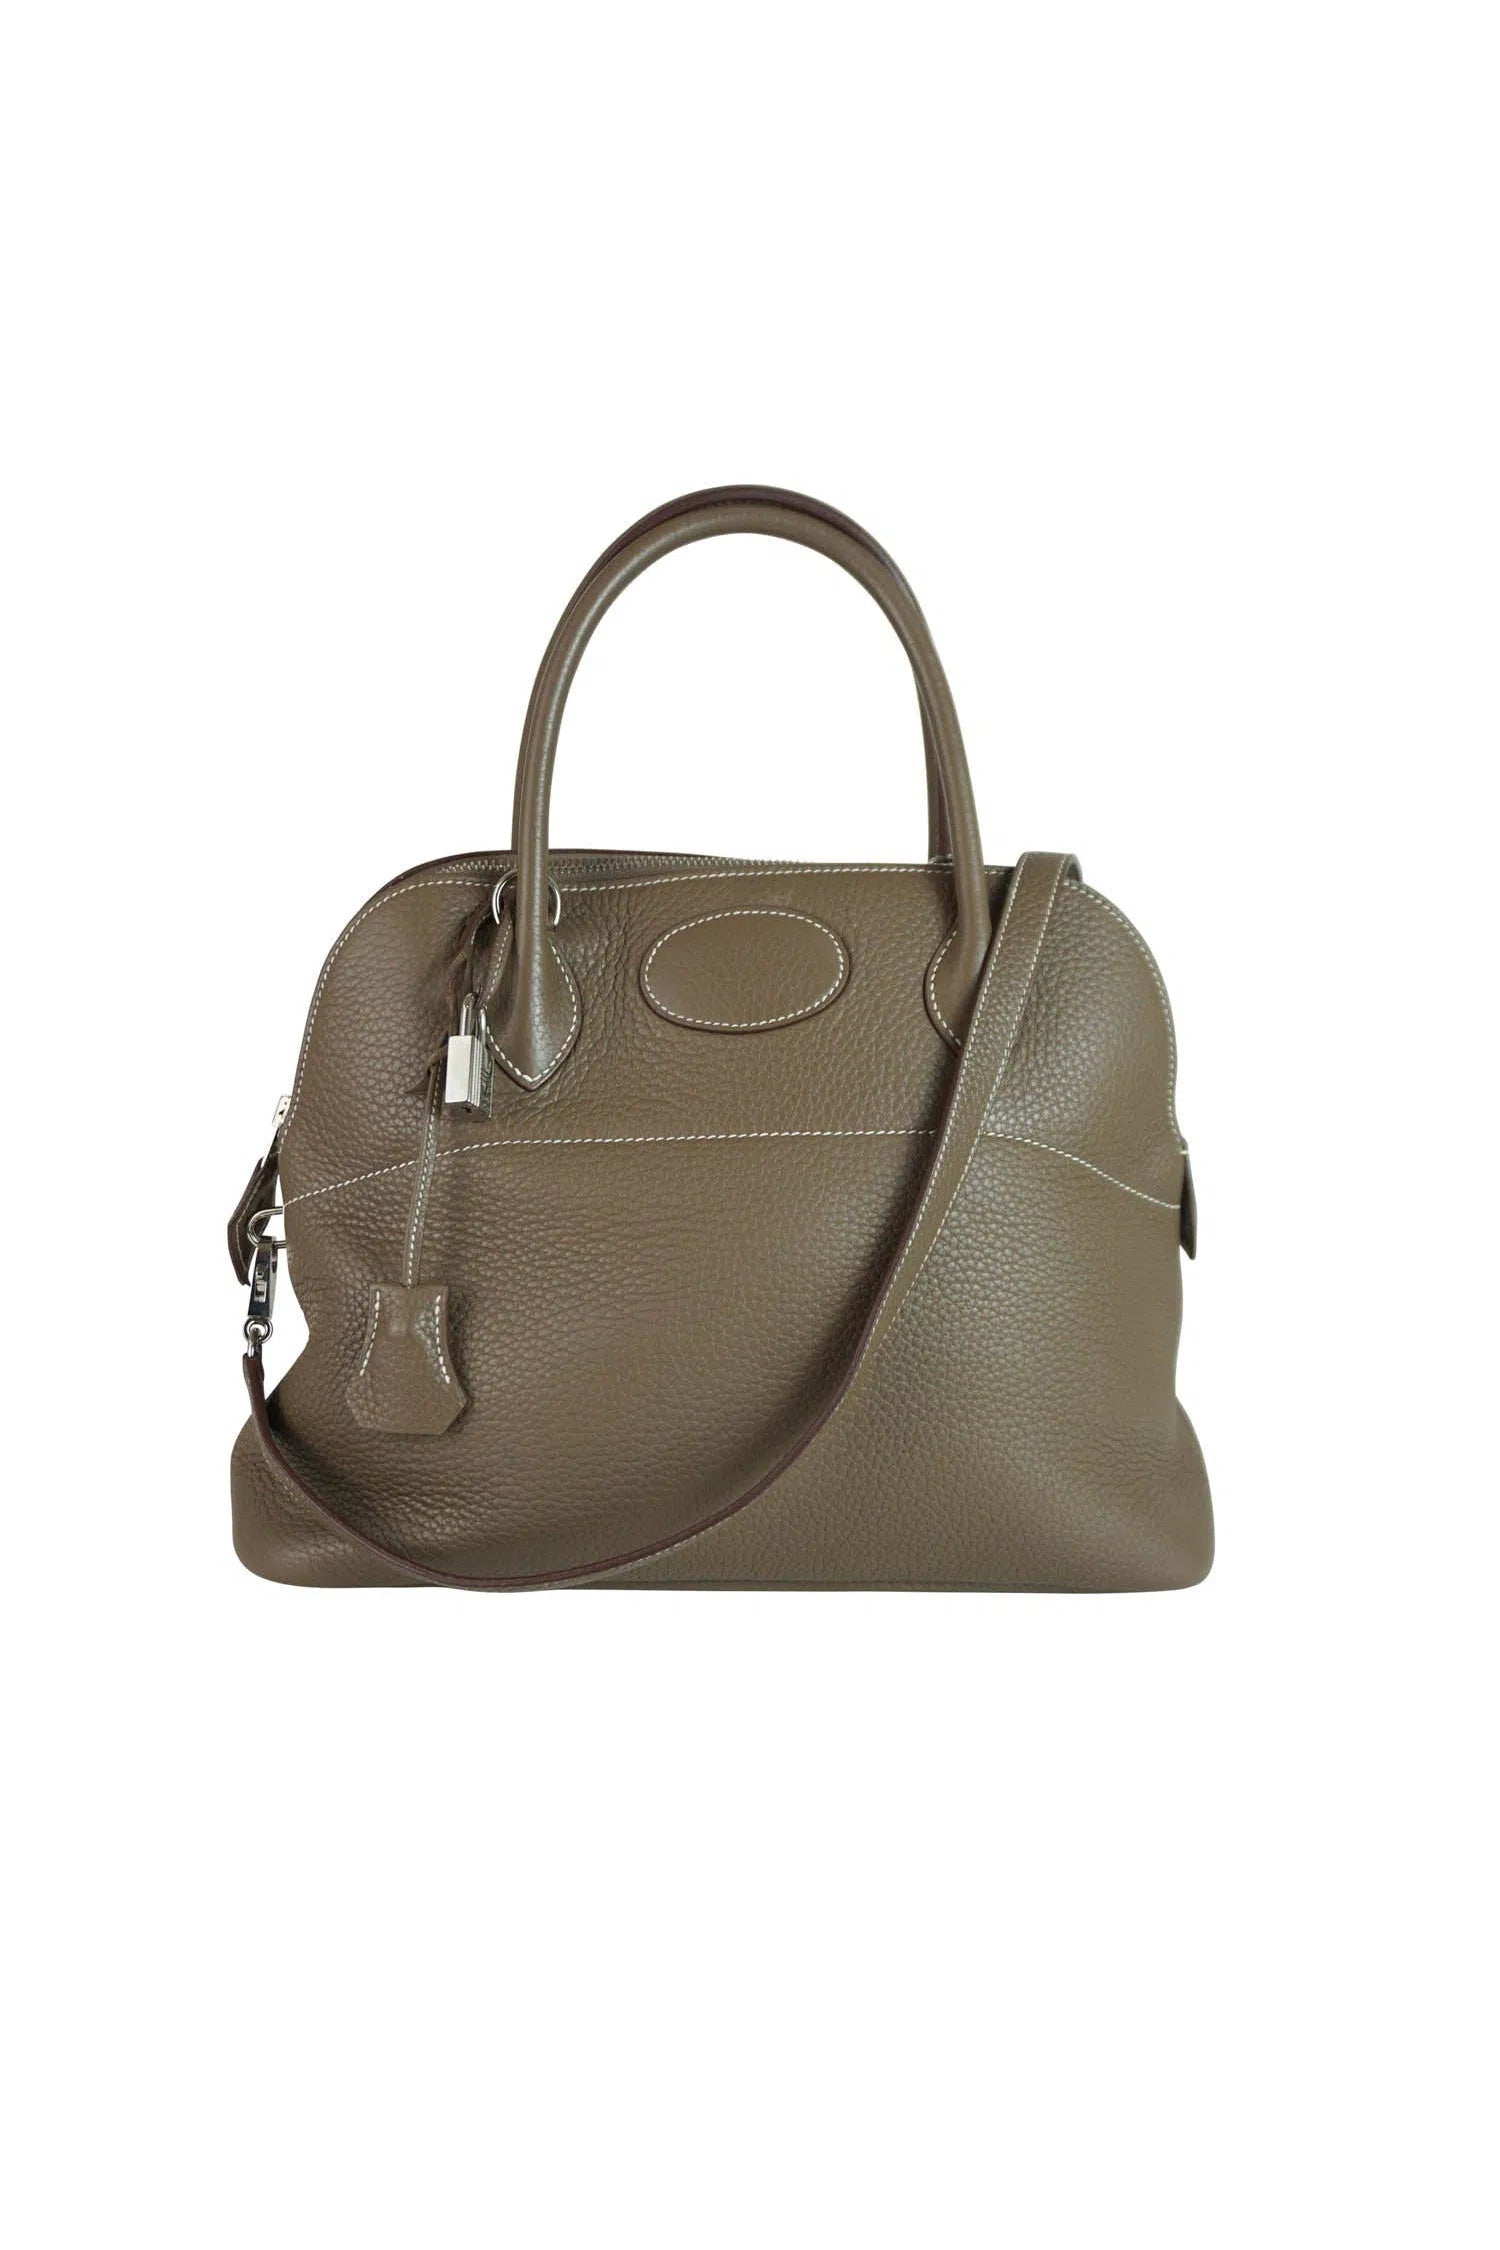 Hermès 31 Bolide Etoupe Clemence Bag 2011 - Foxy Couture Carmel